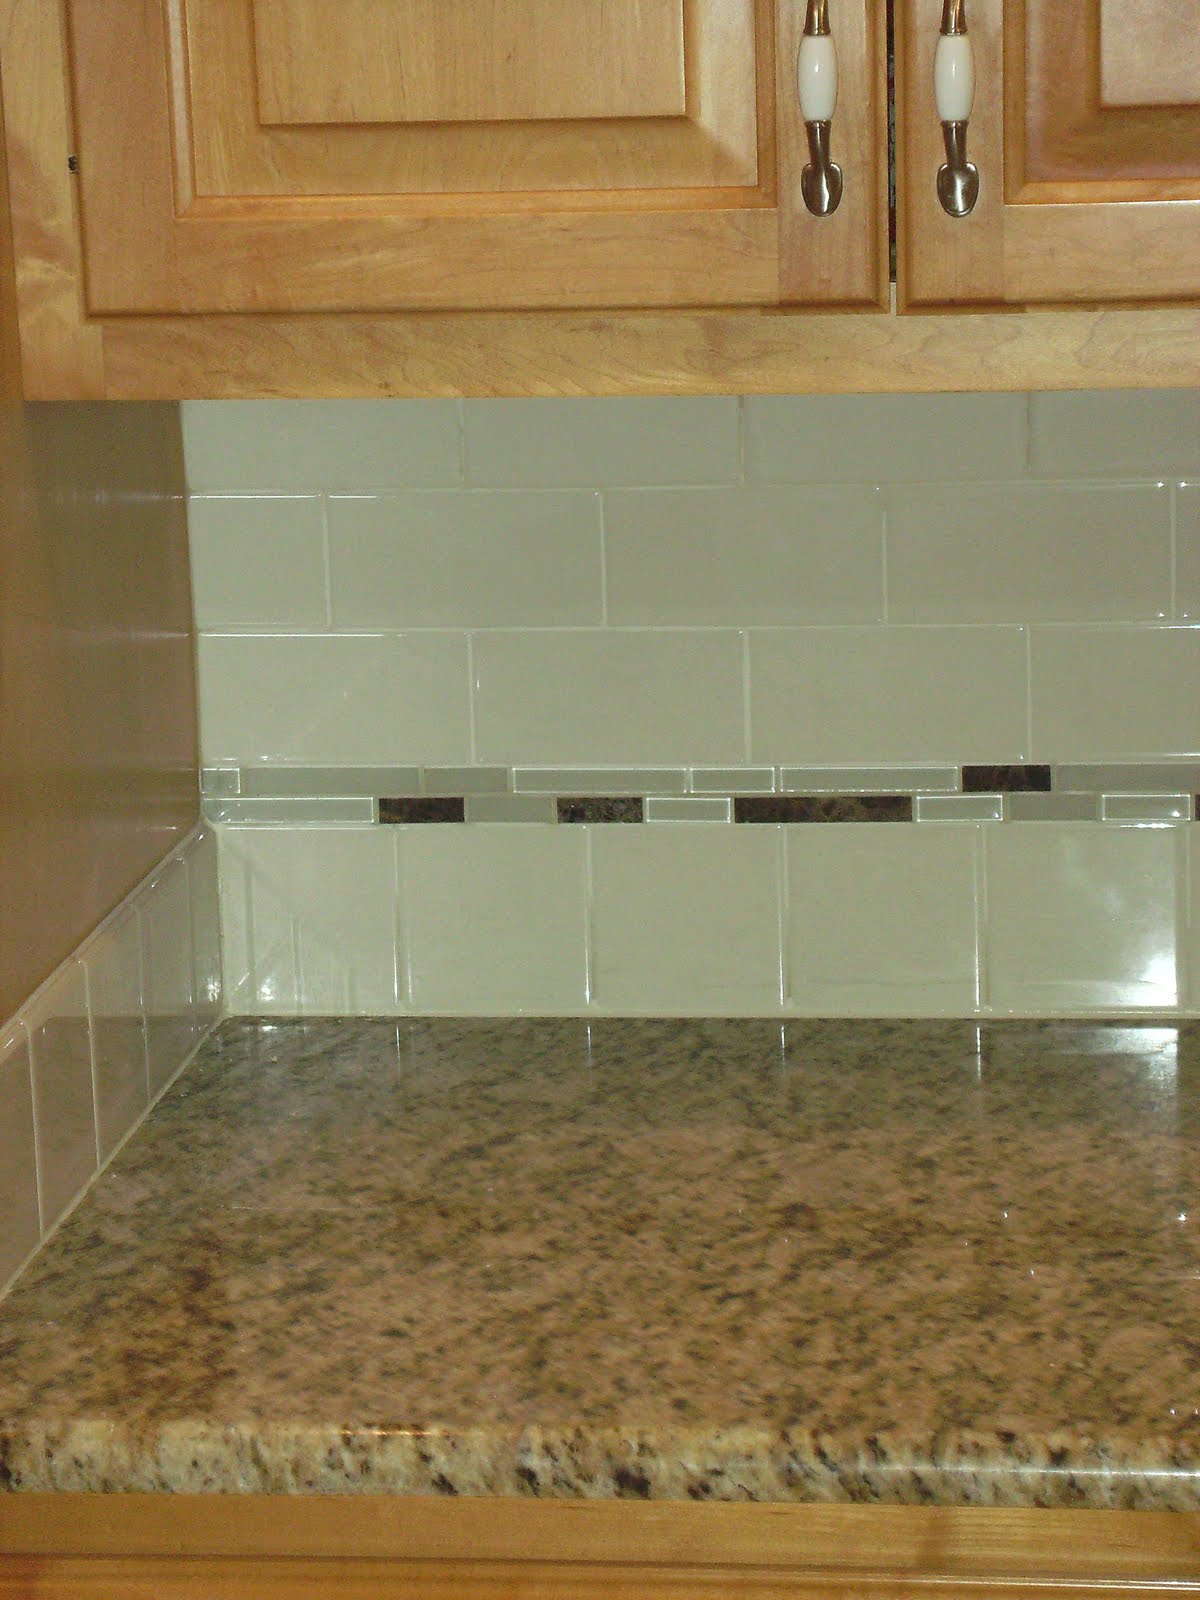 Knapp Tile and Flooring, Inc.: Subway Tile Backsplash